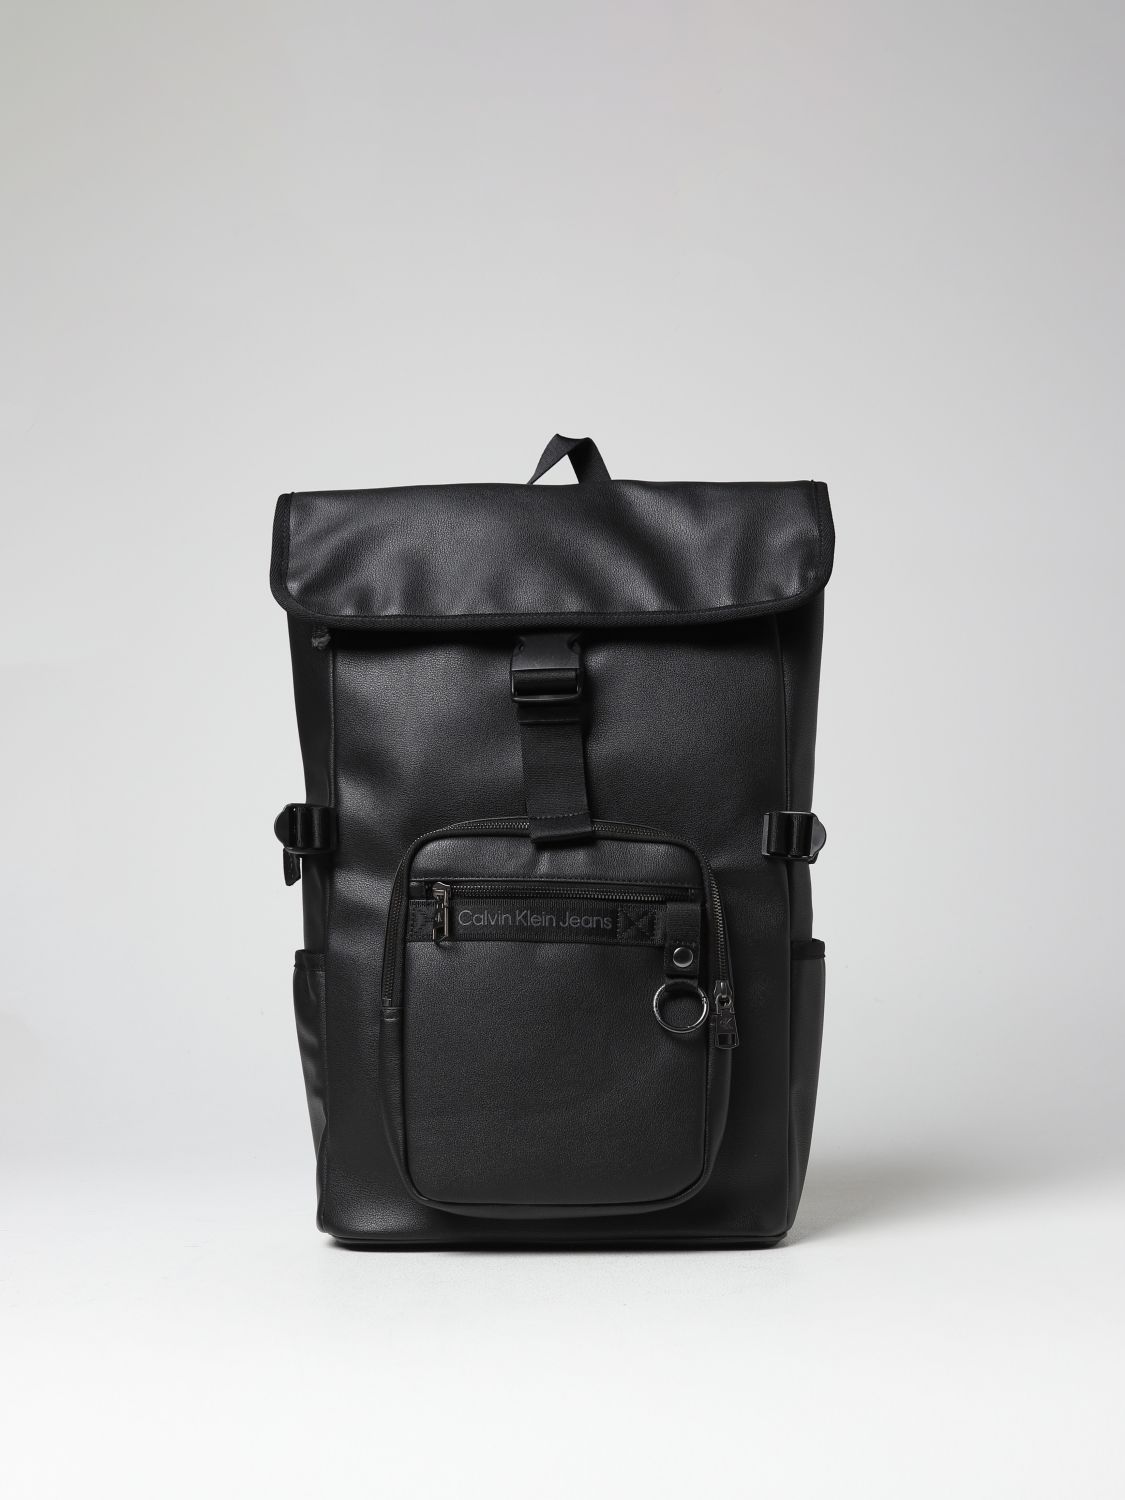 CALVIN KLEIN JEANS: backpack for man - Black | Calvin Klein Jeans ...